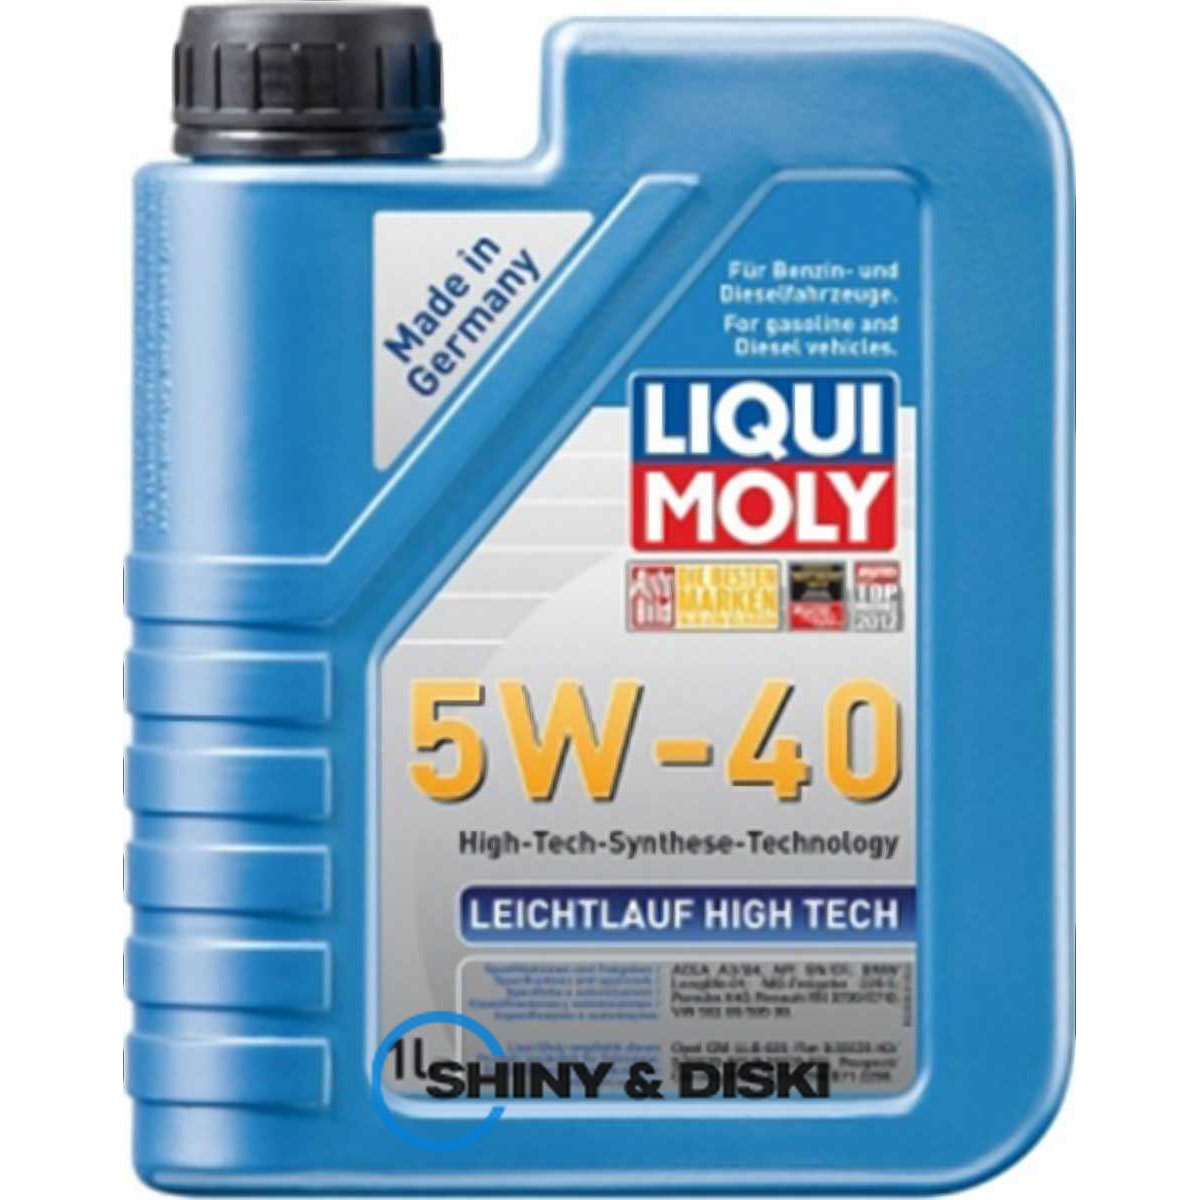 liqui moly leichtlauf high tech 5w-40 (1л)